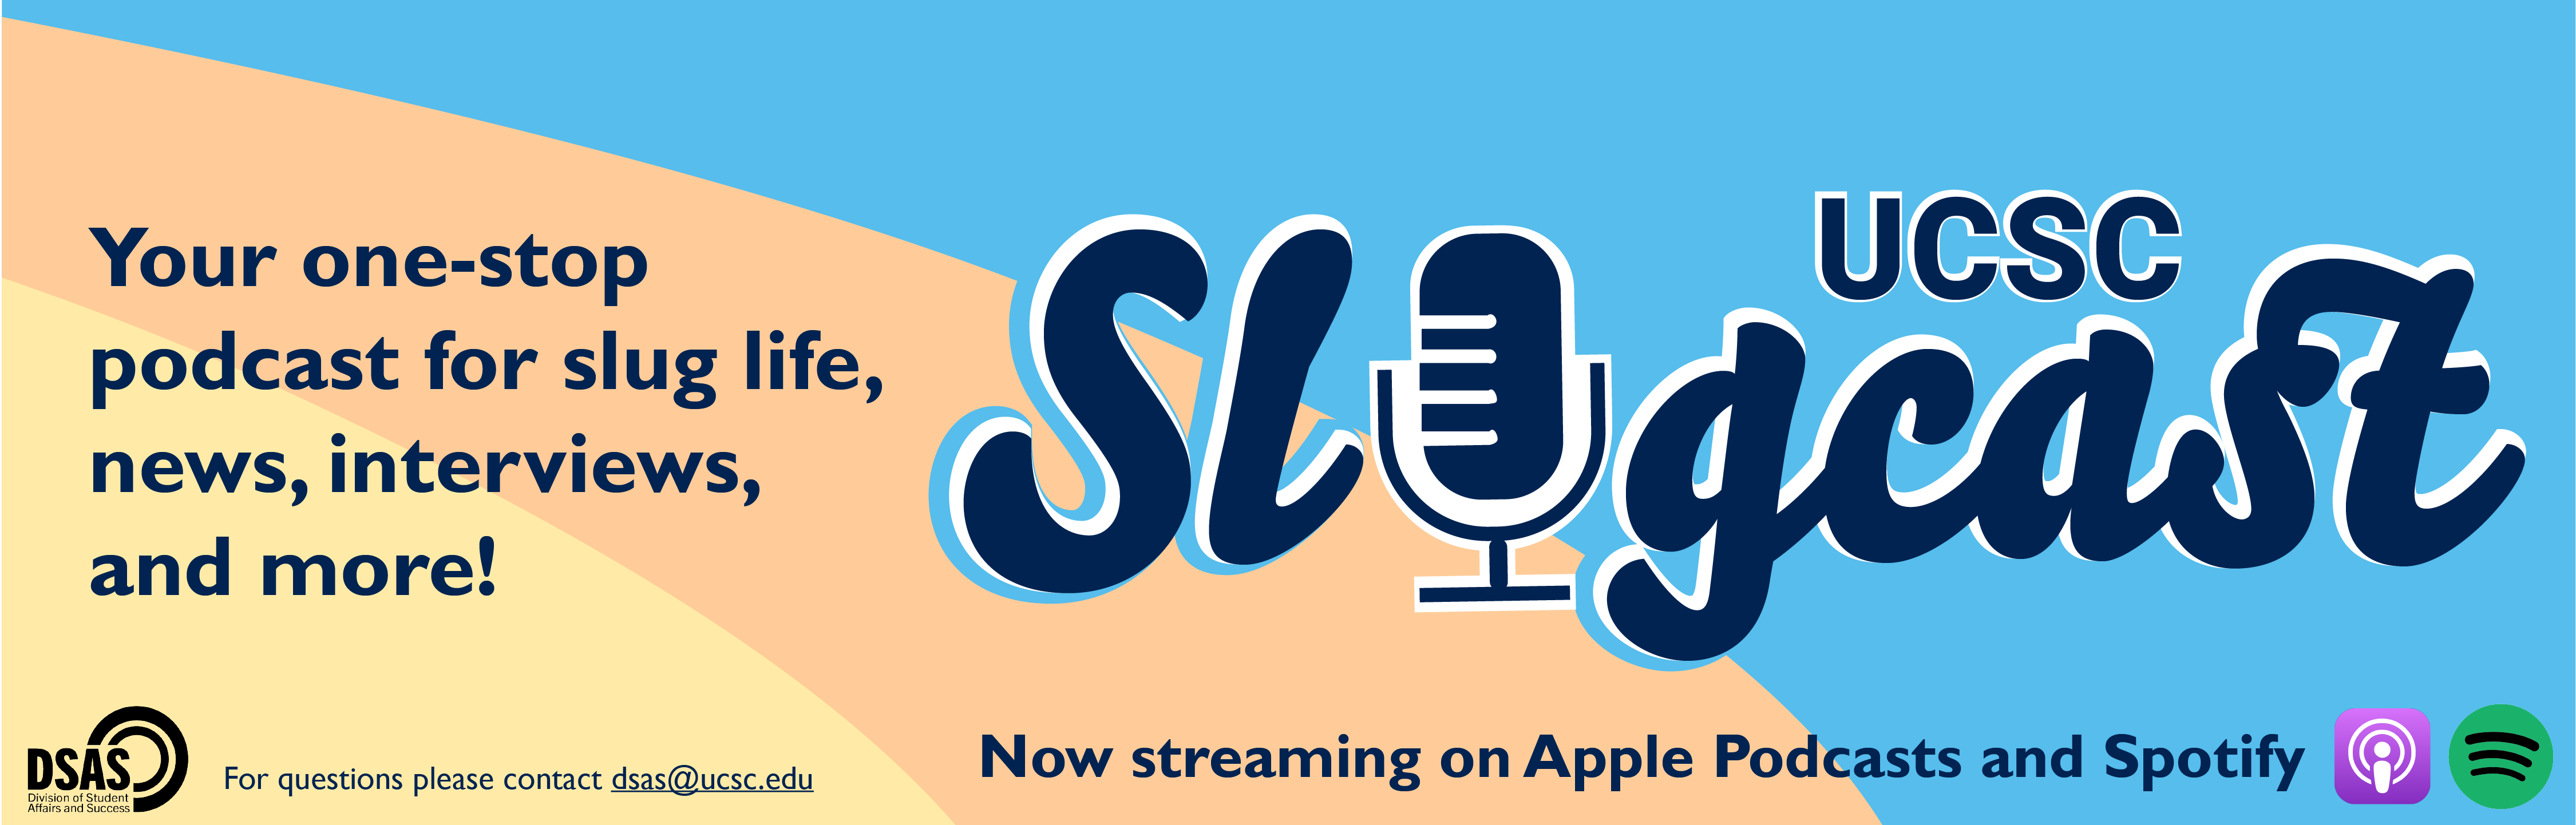 Listen to UCSC Slugcast!